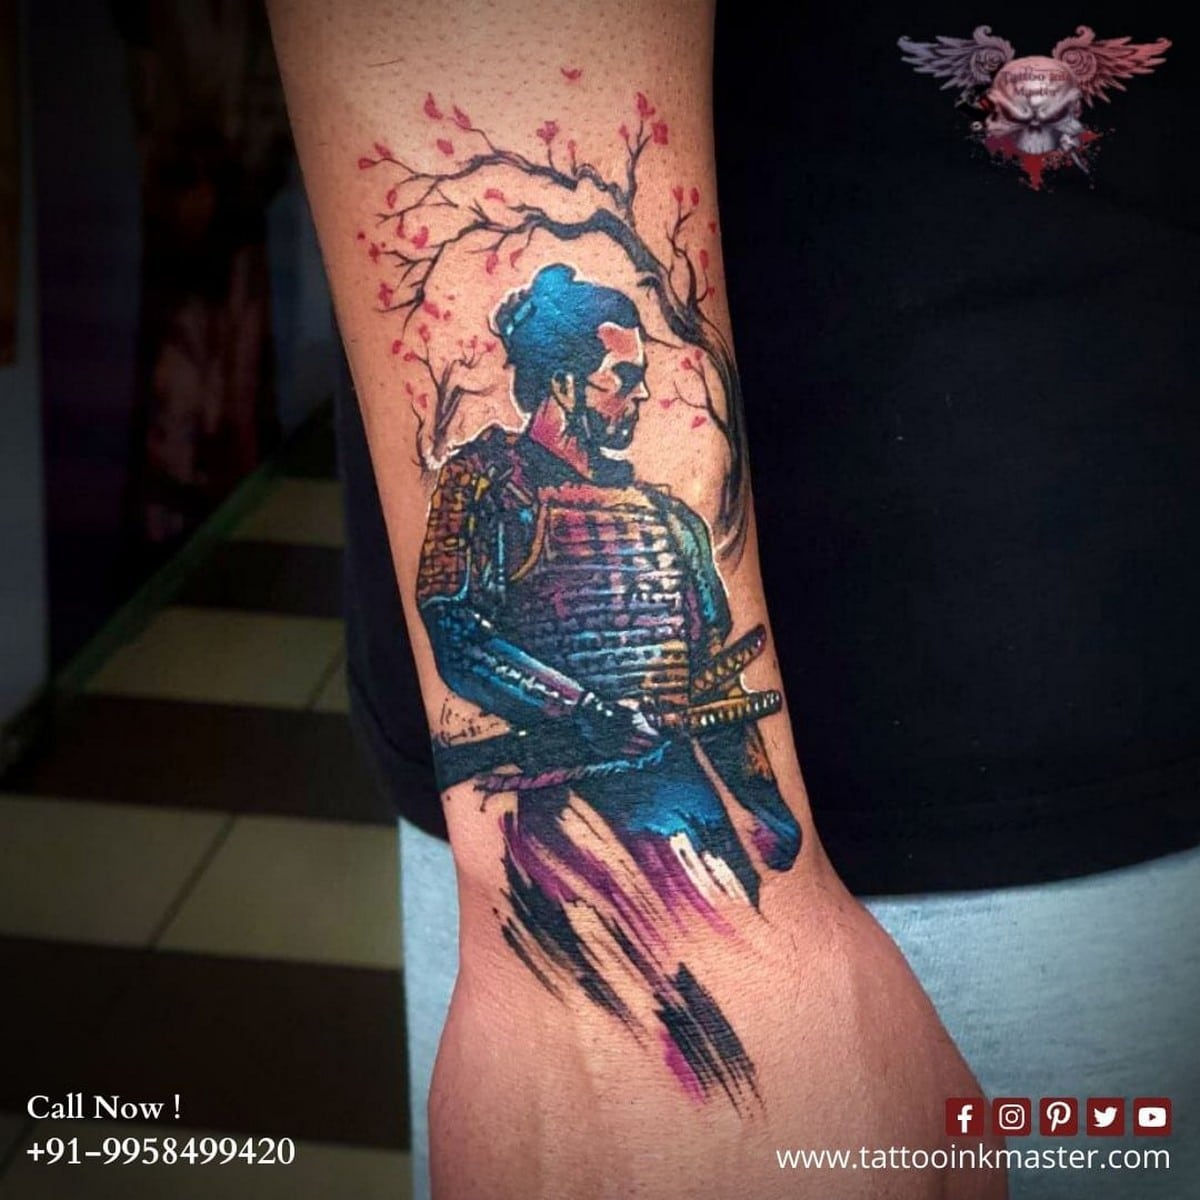 Roman Warrior Tattoo - Worldwide Tattoo & Piercing Blog